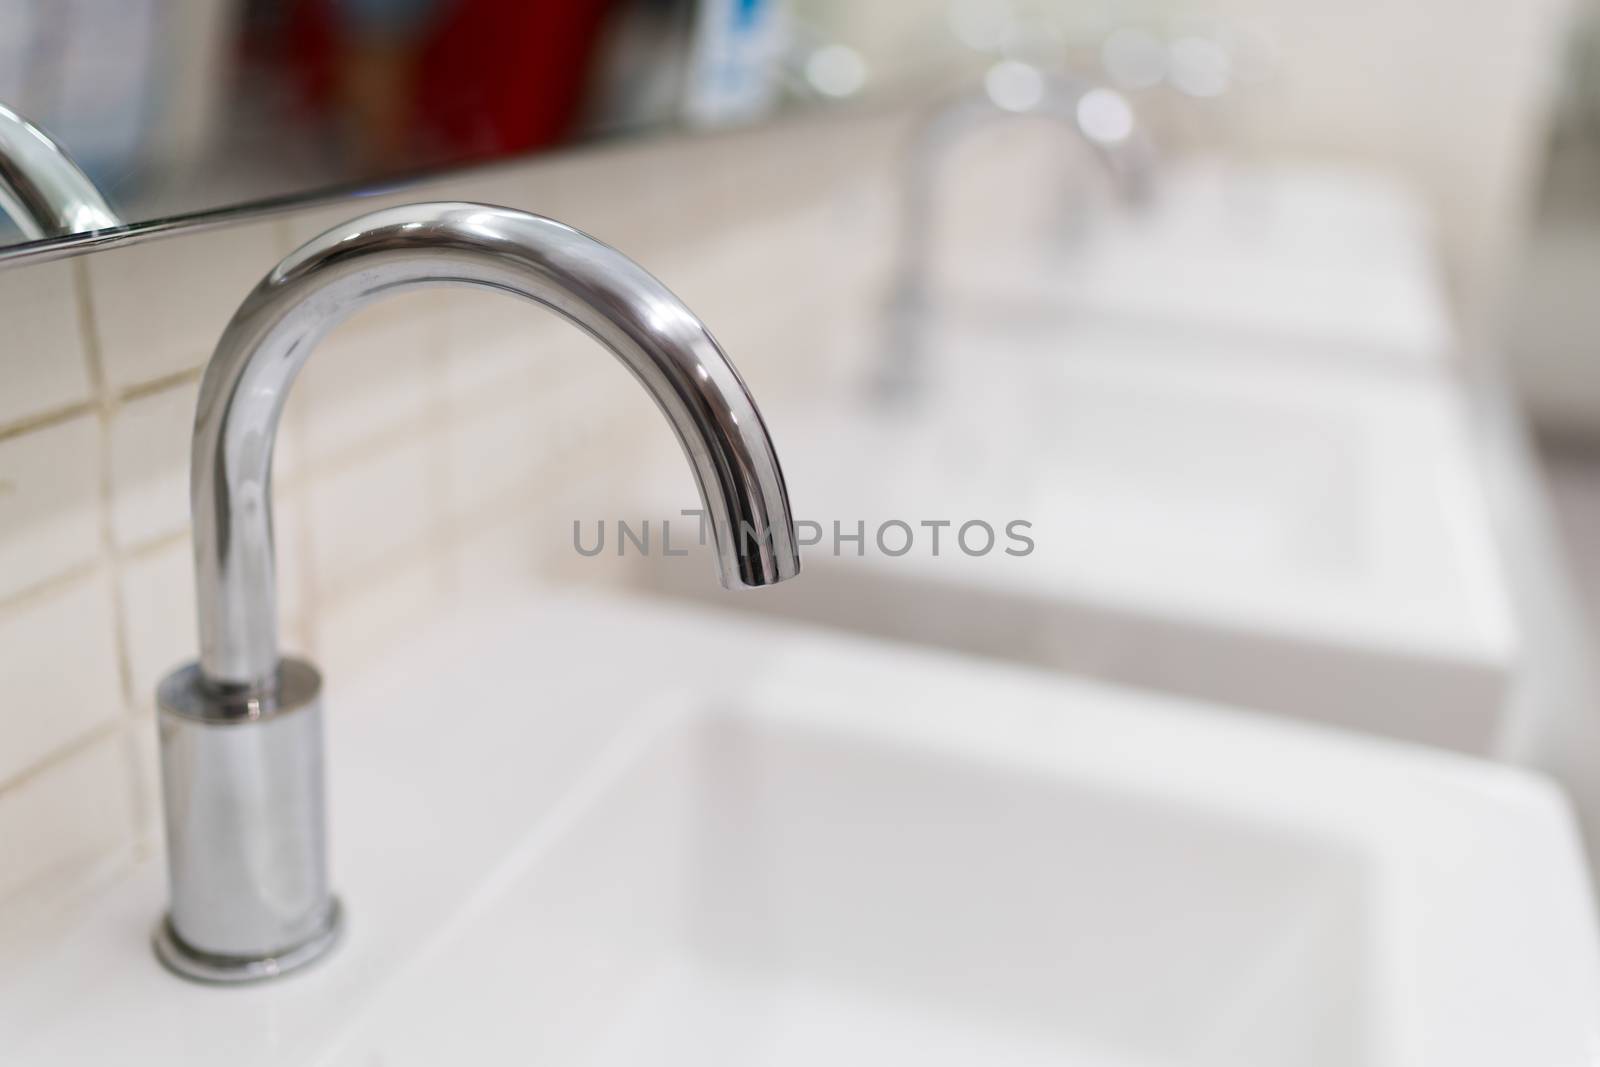 Modern water faucet in toilet, depth of field effect by beer5020